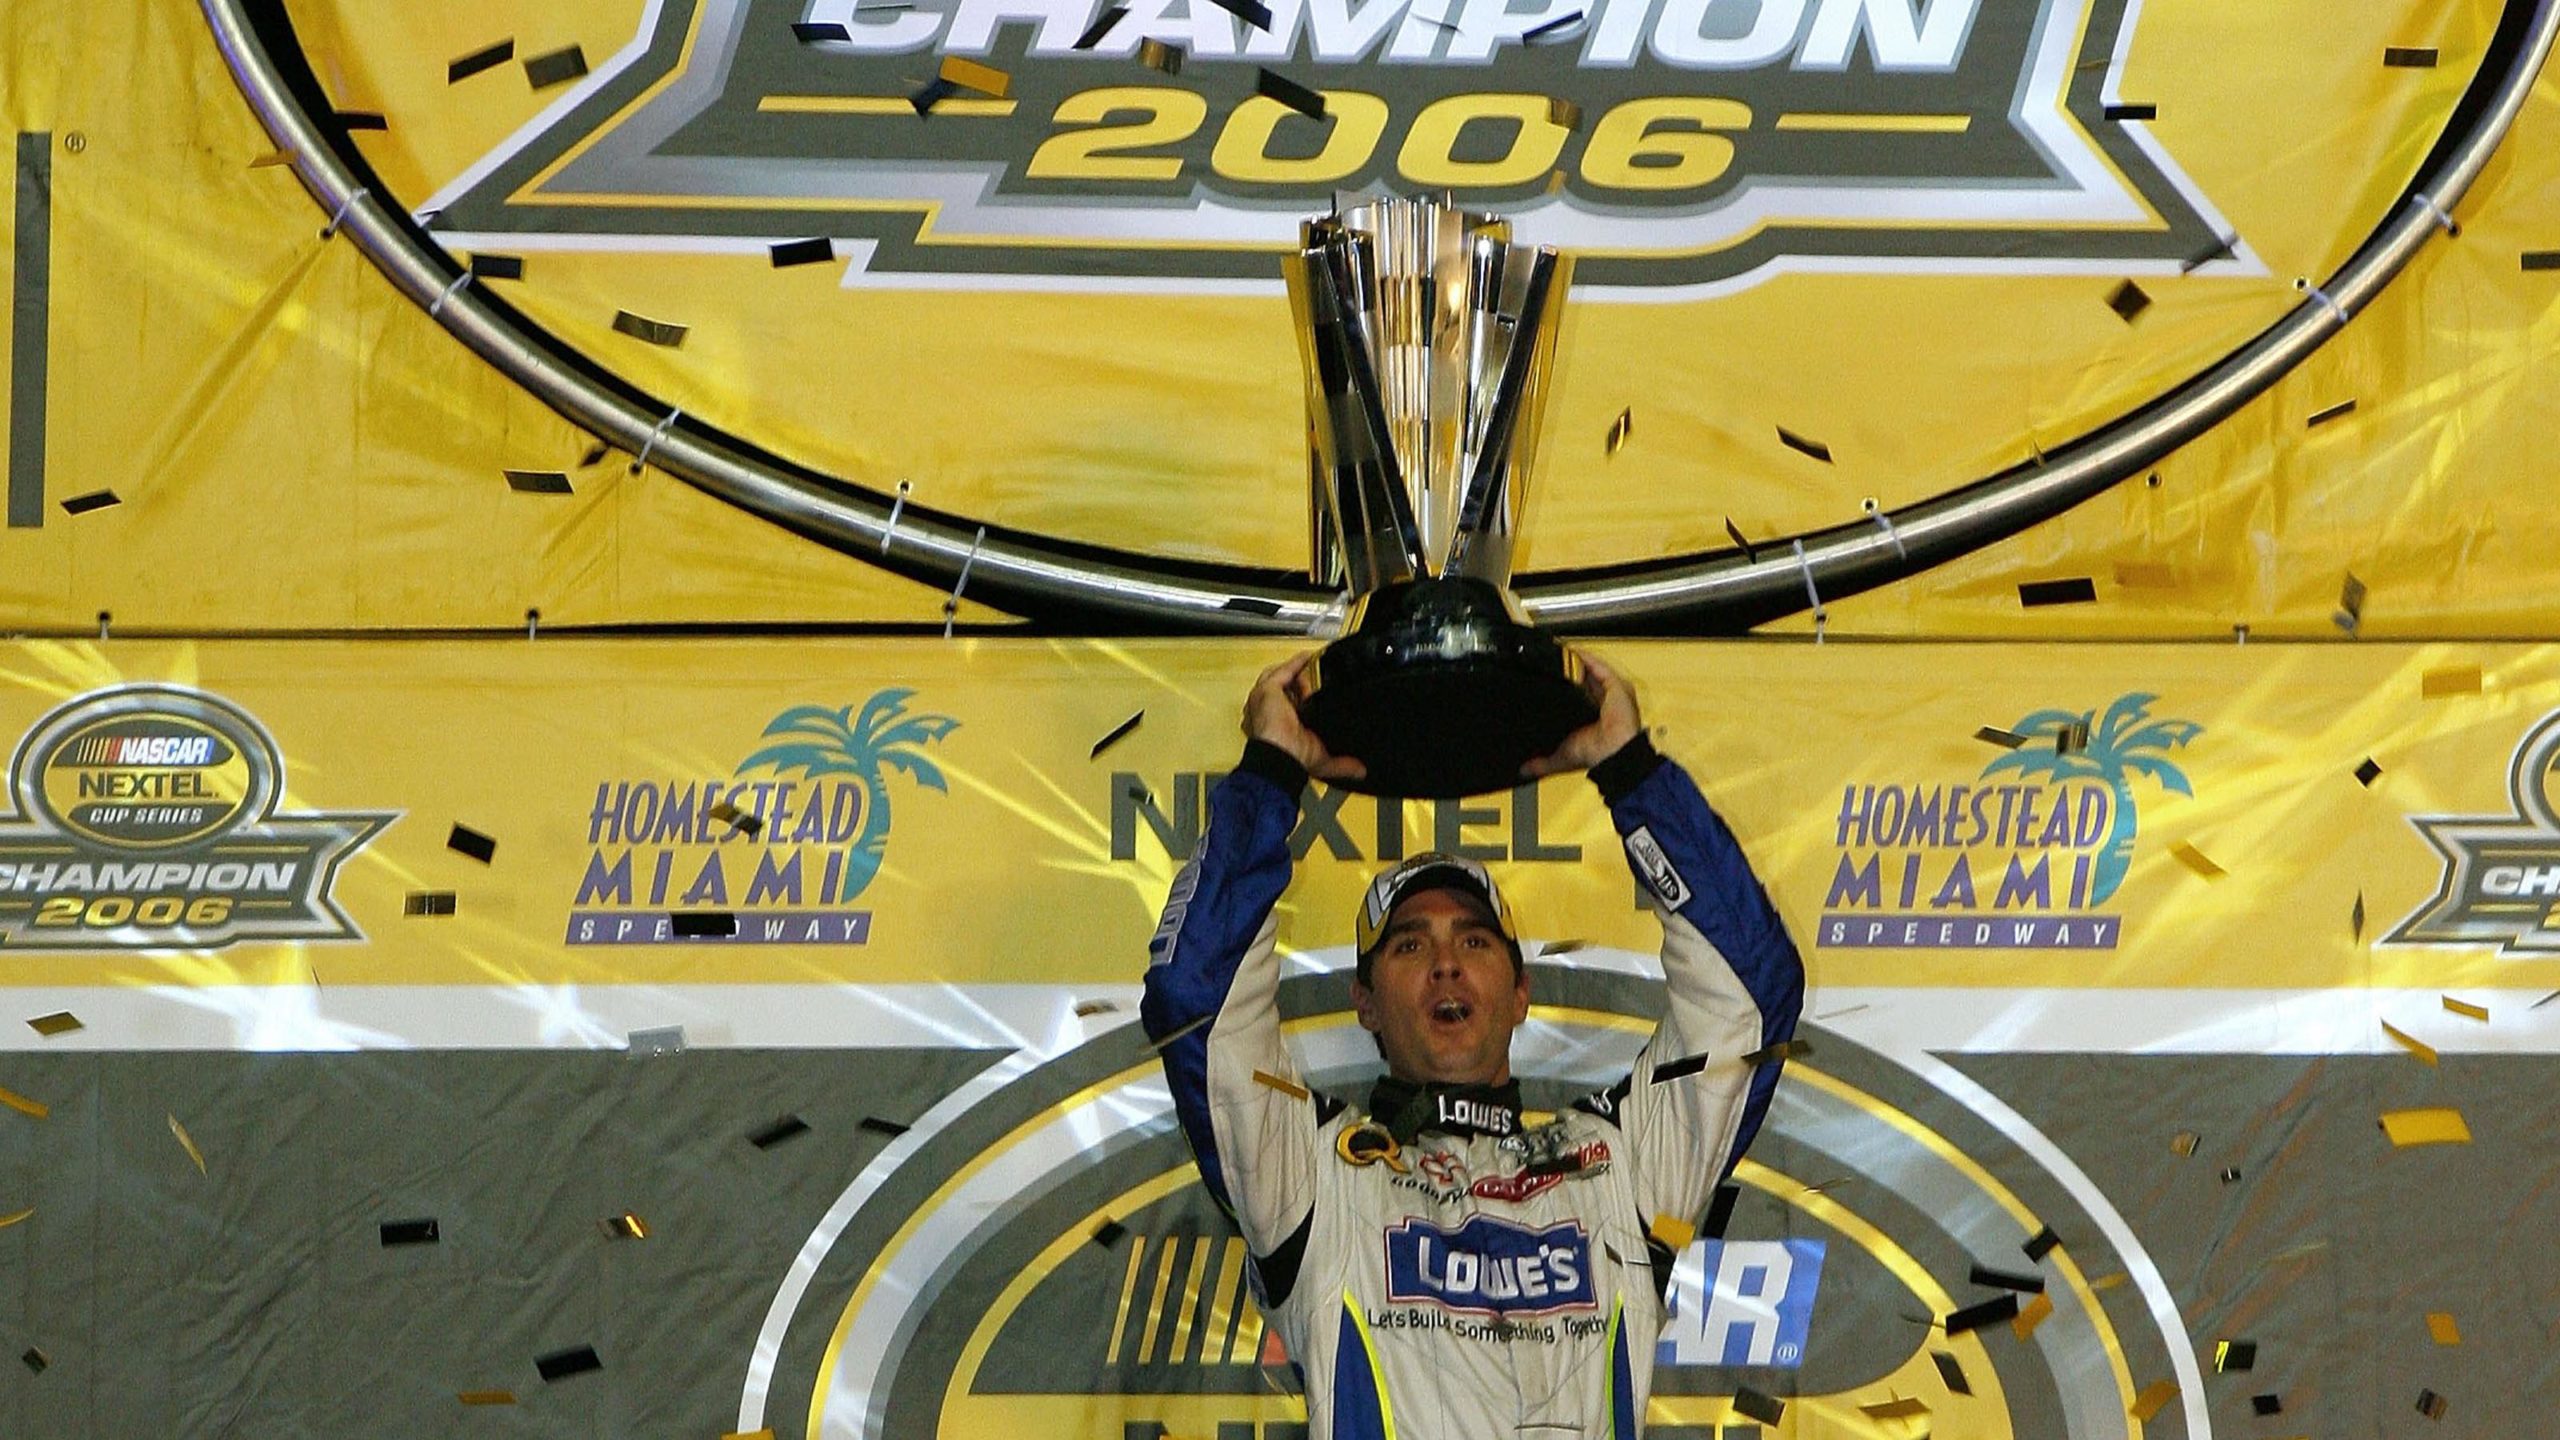 Jimmie Johnson celebrates winning the 2006 NASCAR championship